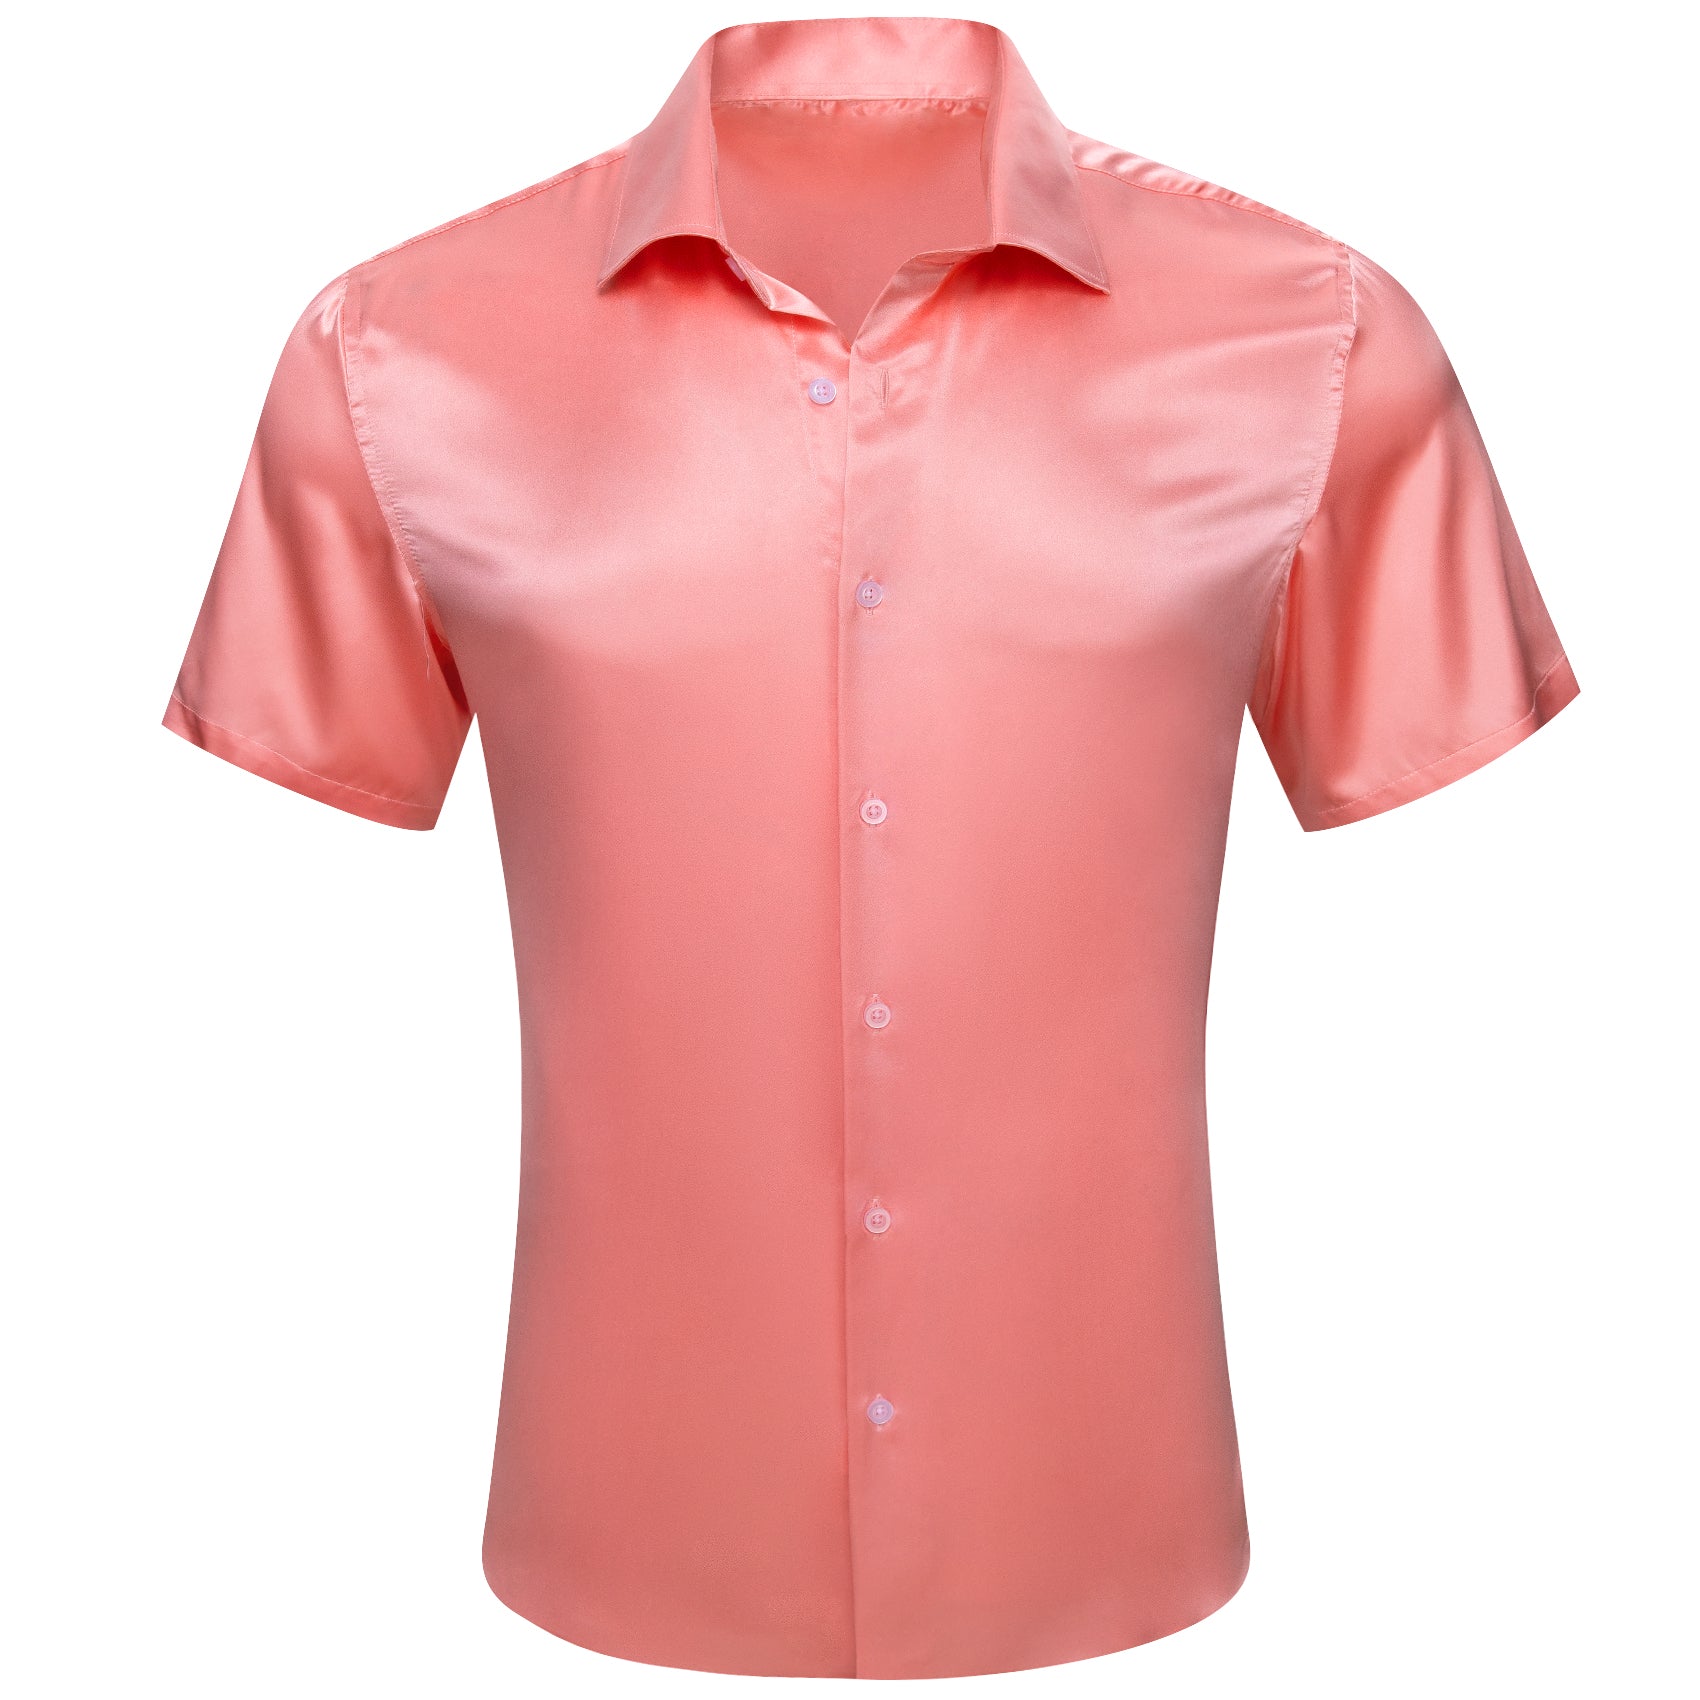 Barry.wang Light Coral Solid Short Sleeves Shirt